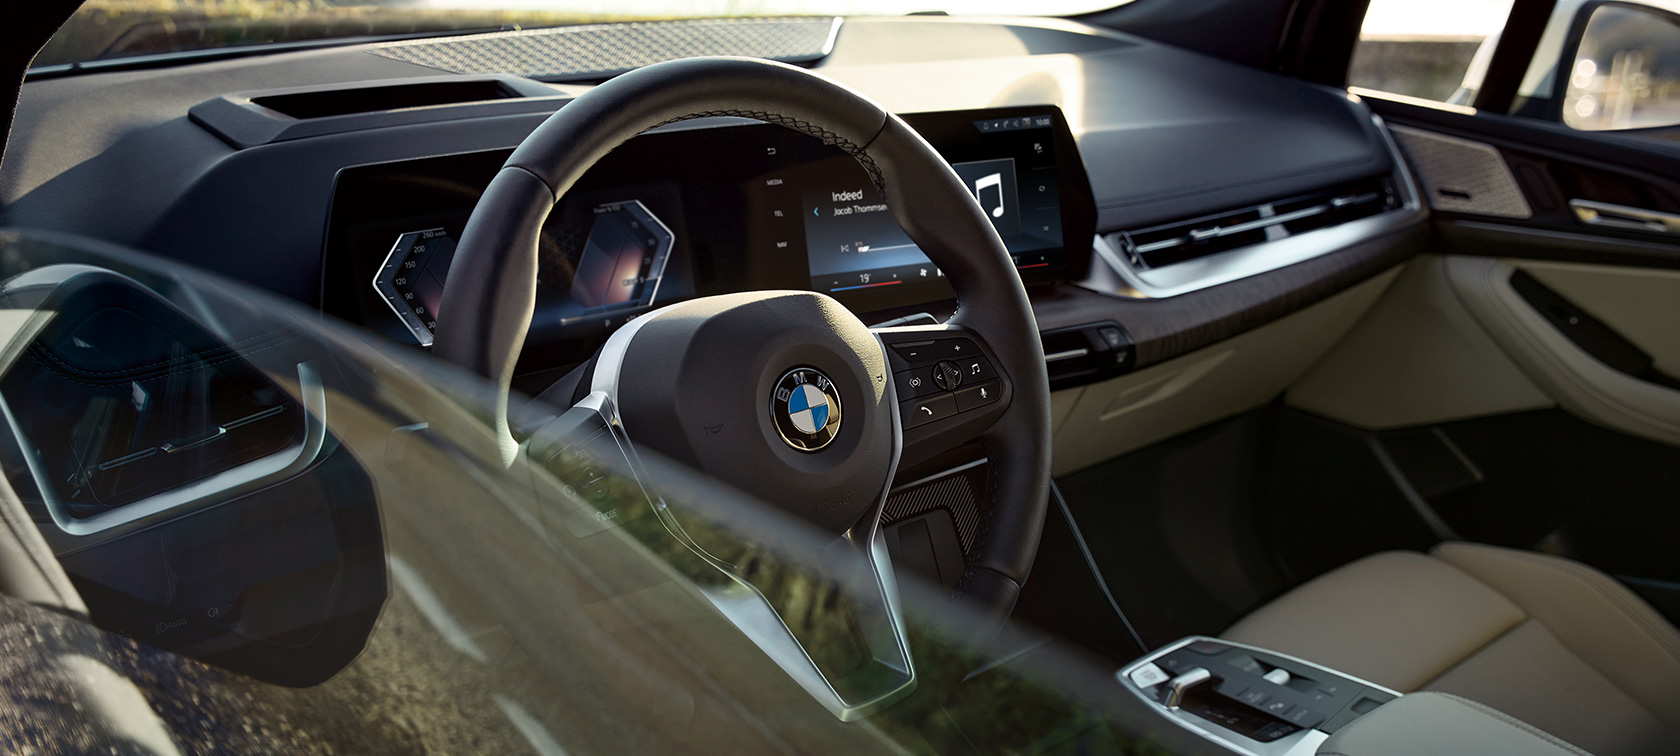 BMW 2 Series Active Tourer U06 2021 interior cockpit